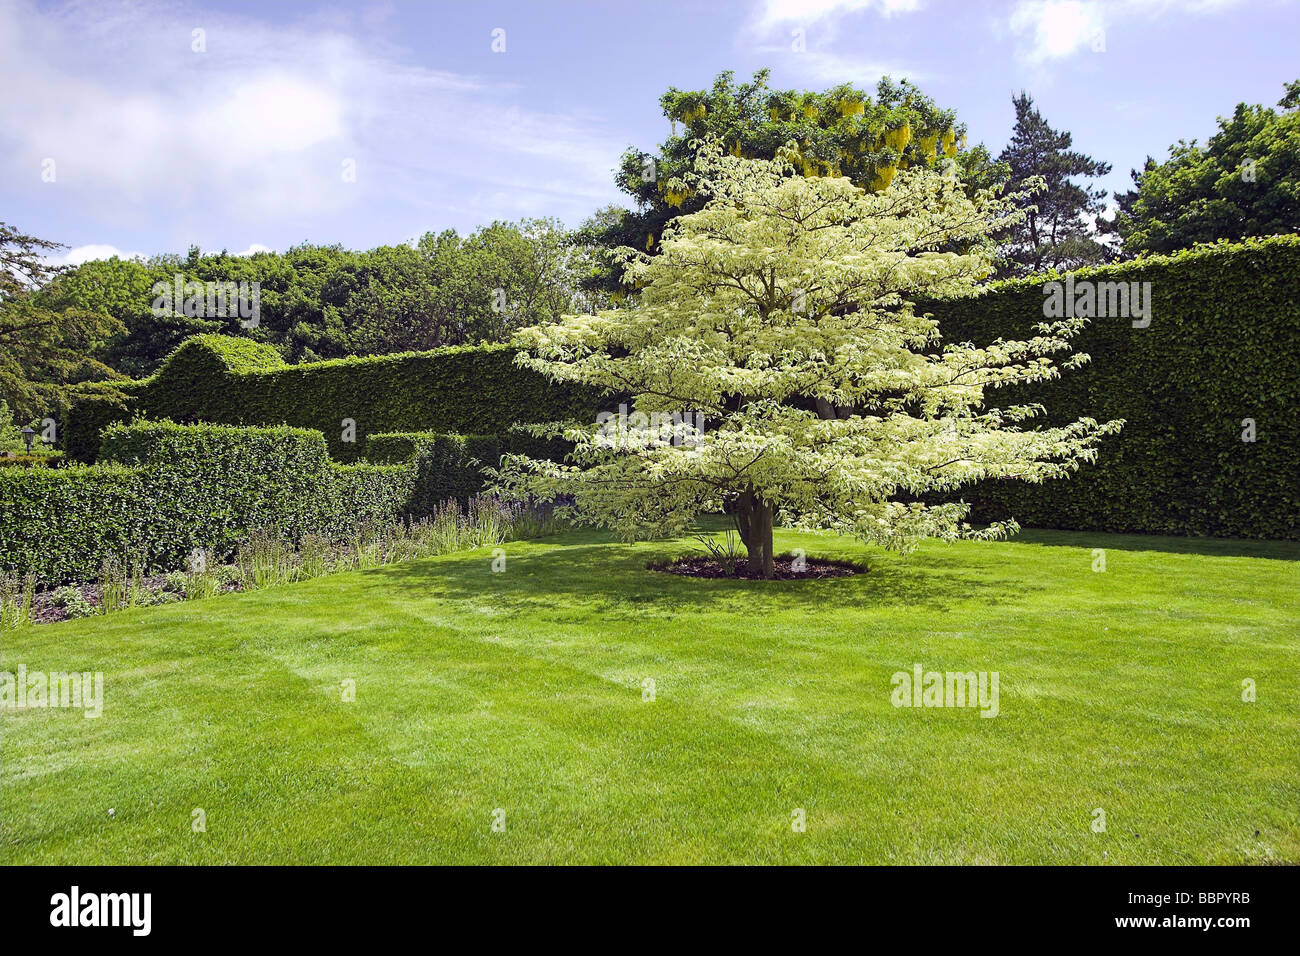 Cornus dogwood wedding cake tree  in a garden with green 